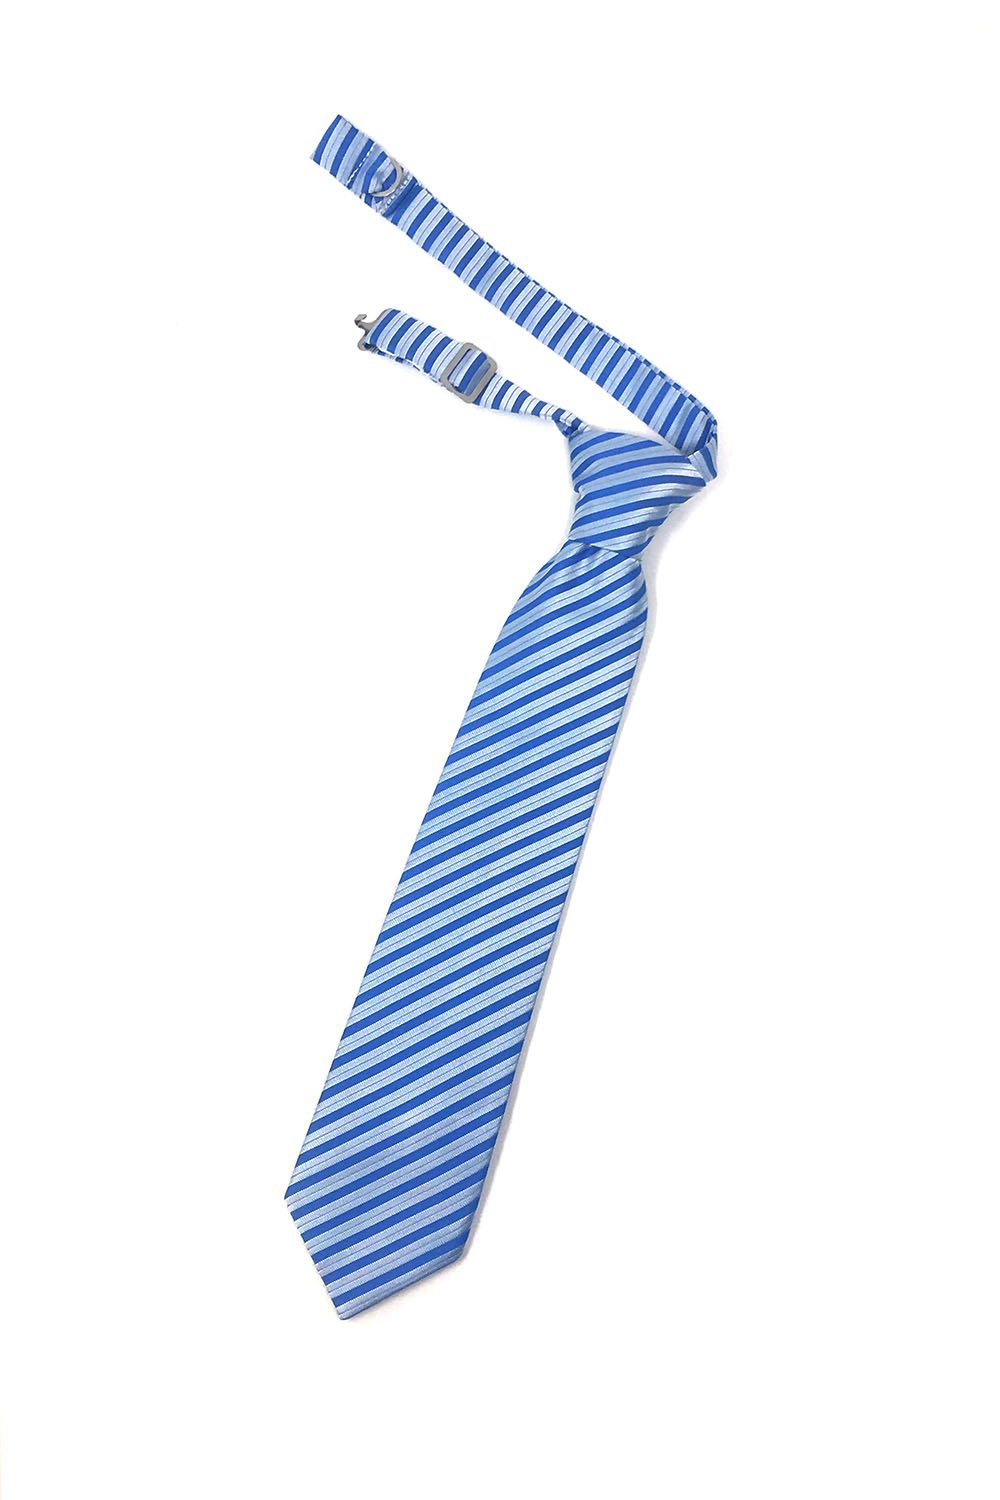 Cardi Blue Newton Stripe Kids Necktie